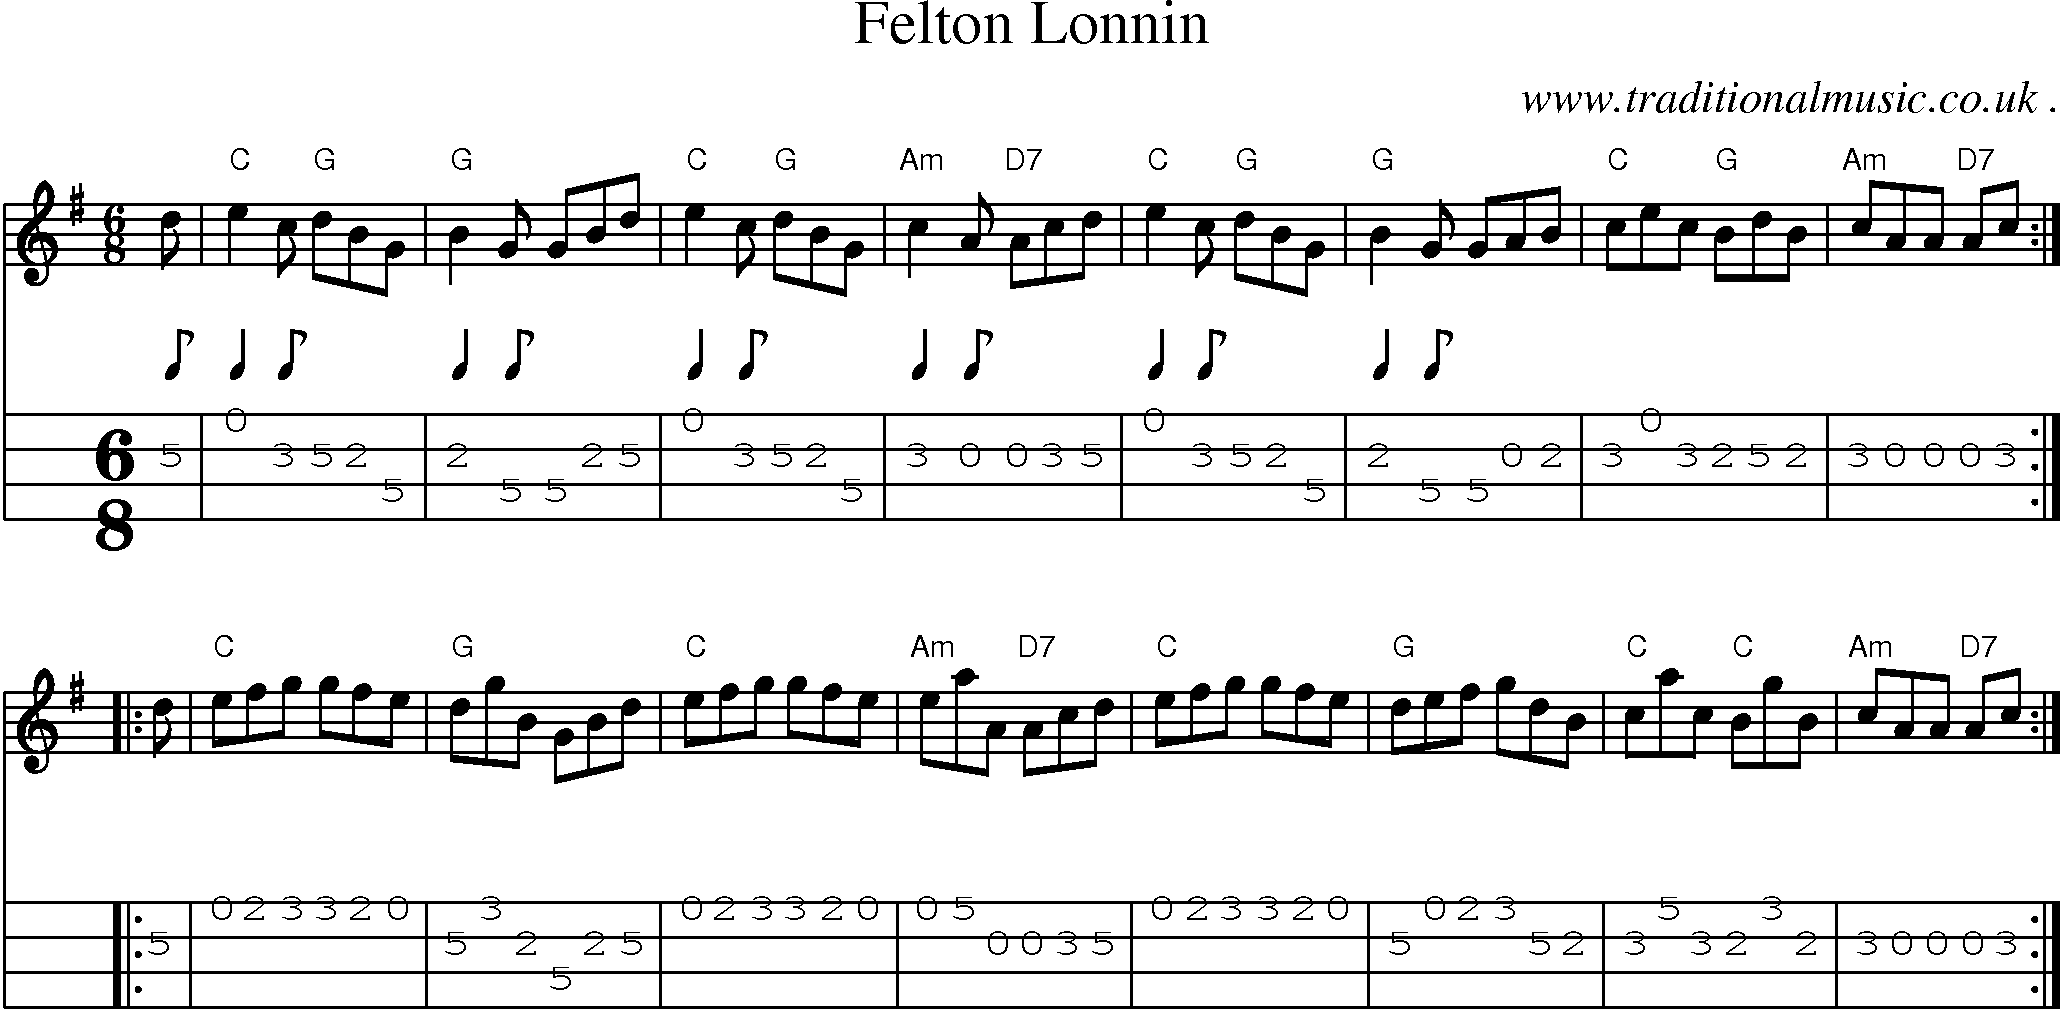 Sheet-music  score, Chords and Mandolin Tabs for Felton Lonnin